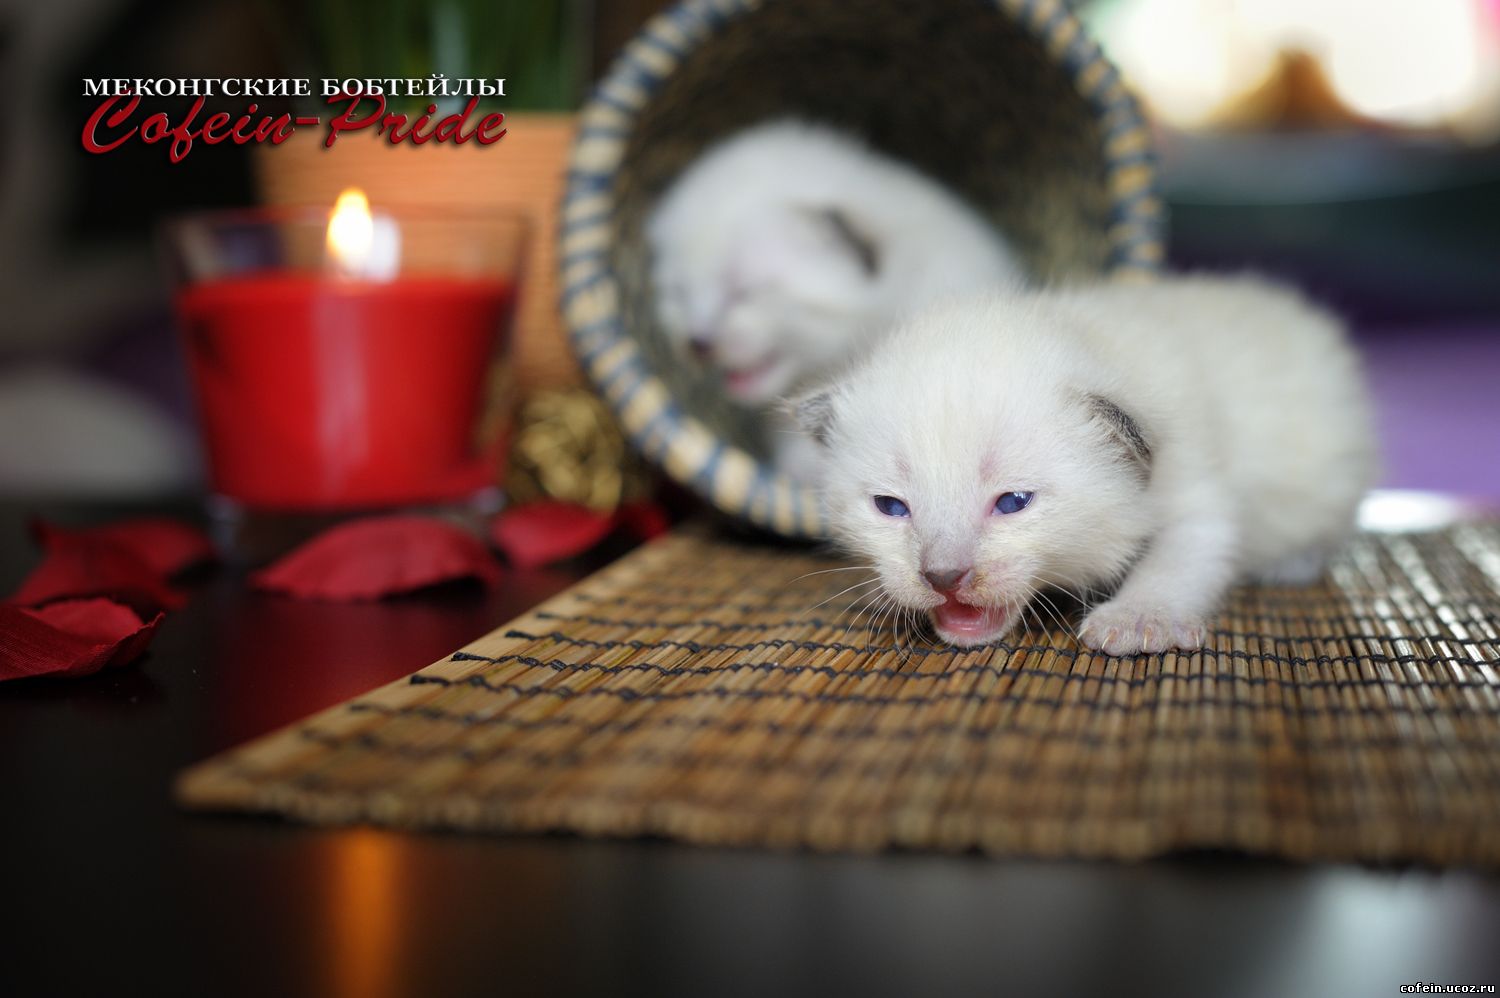 меконгский бобтейл, котятам 7 дней, питомник Кофеин-Прайд